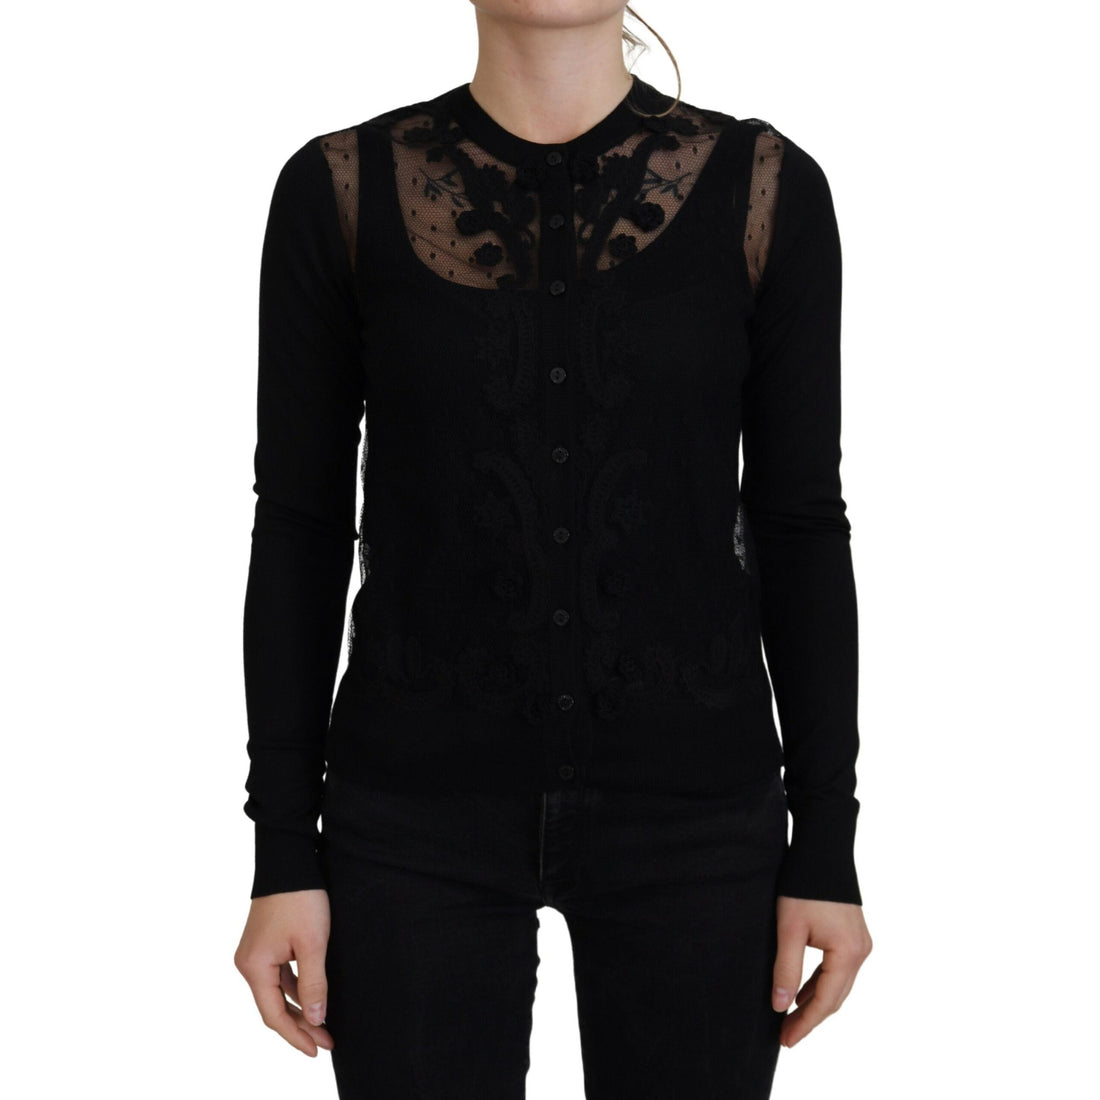 Dolce & Gabbana Black Floral Lace Button Cardigan Sweater